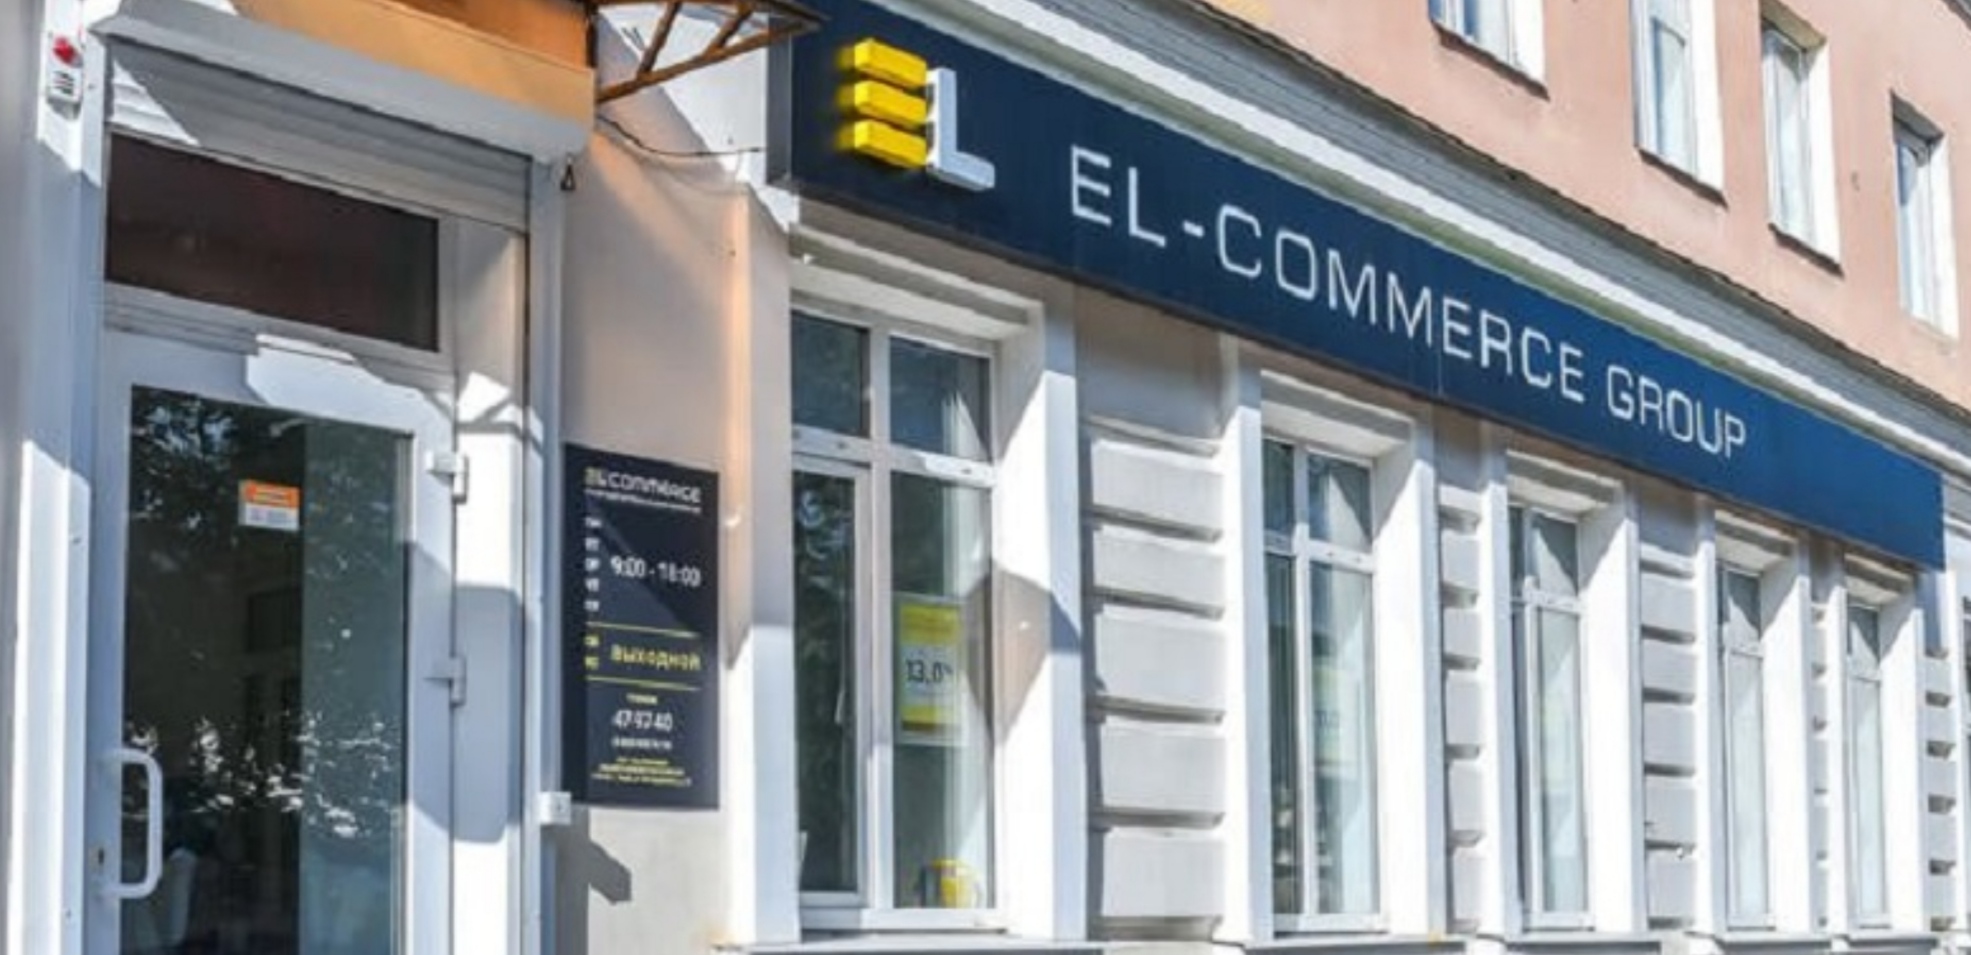 EL-Commerce сайт